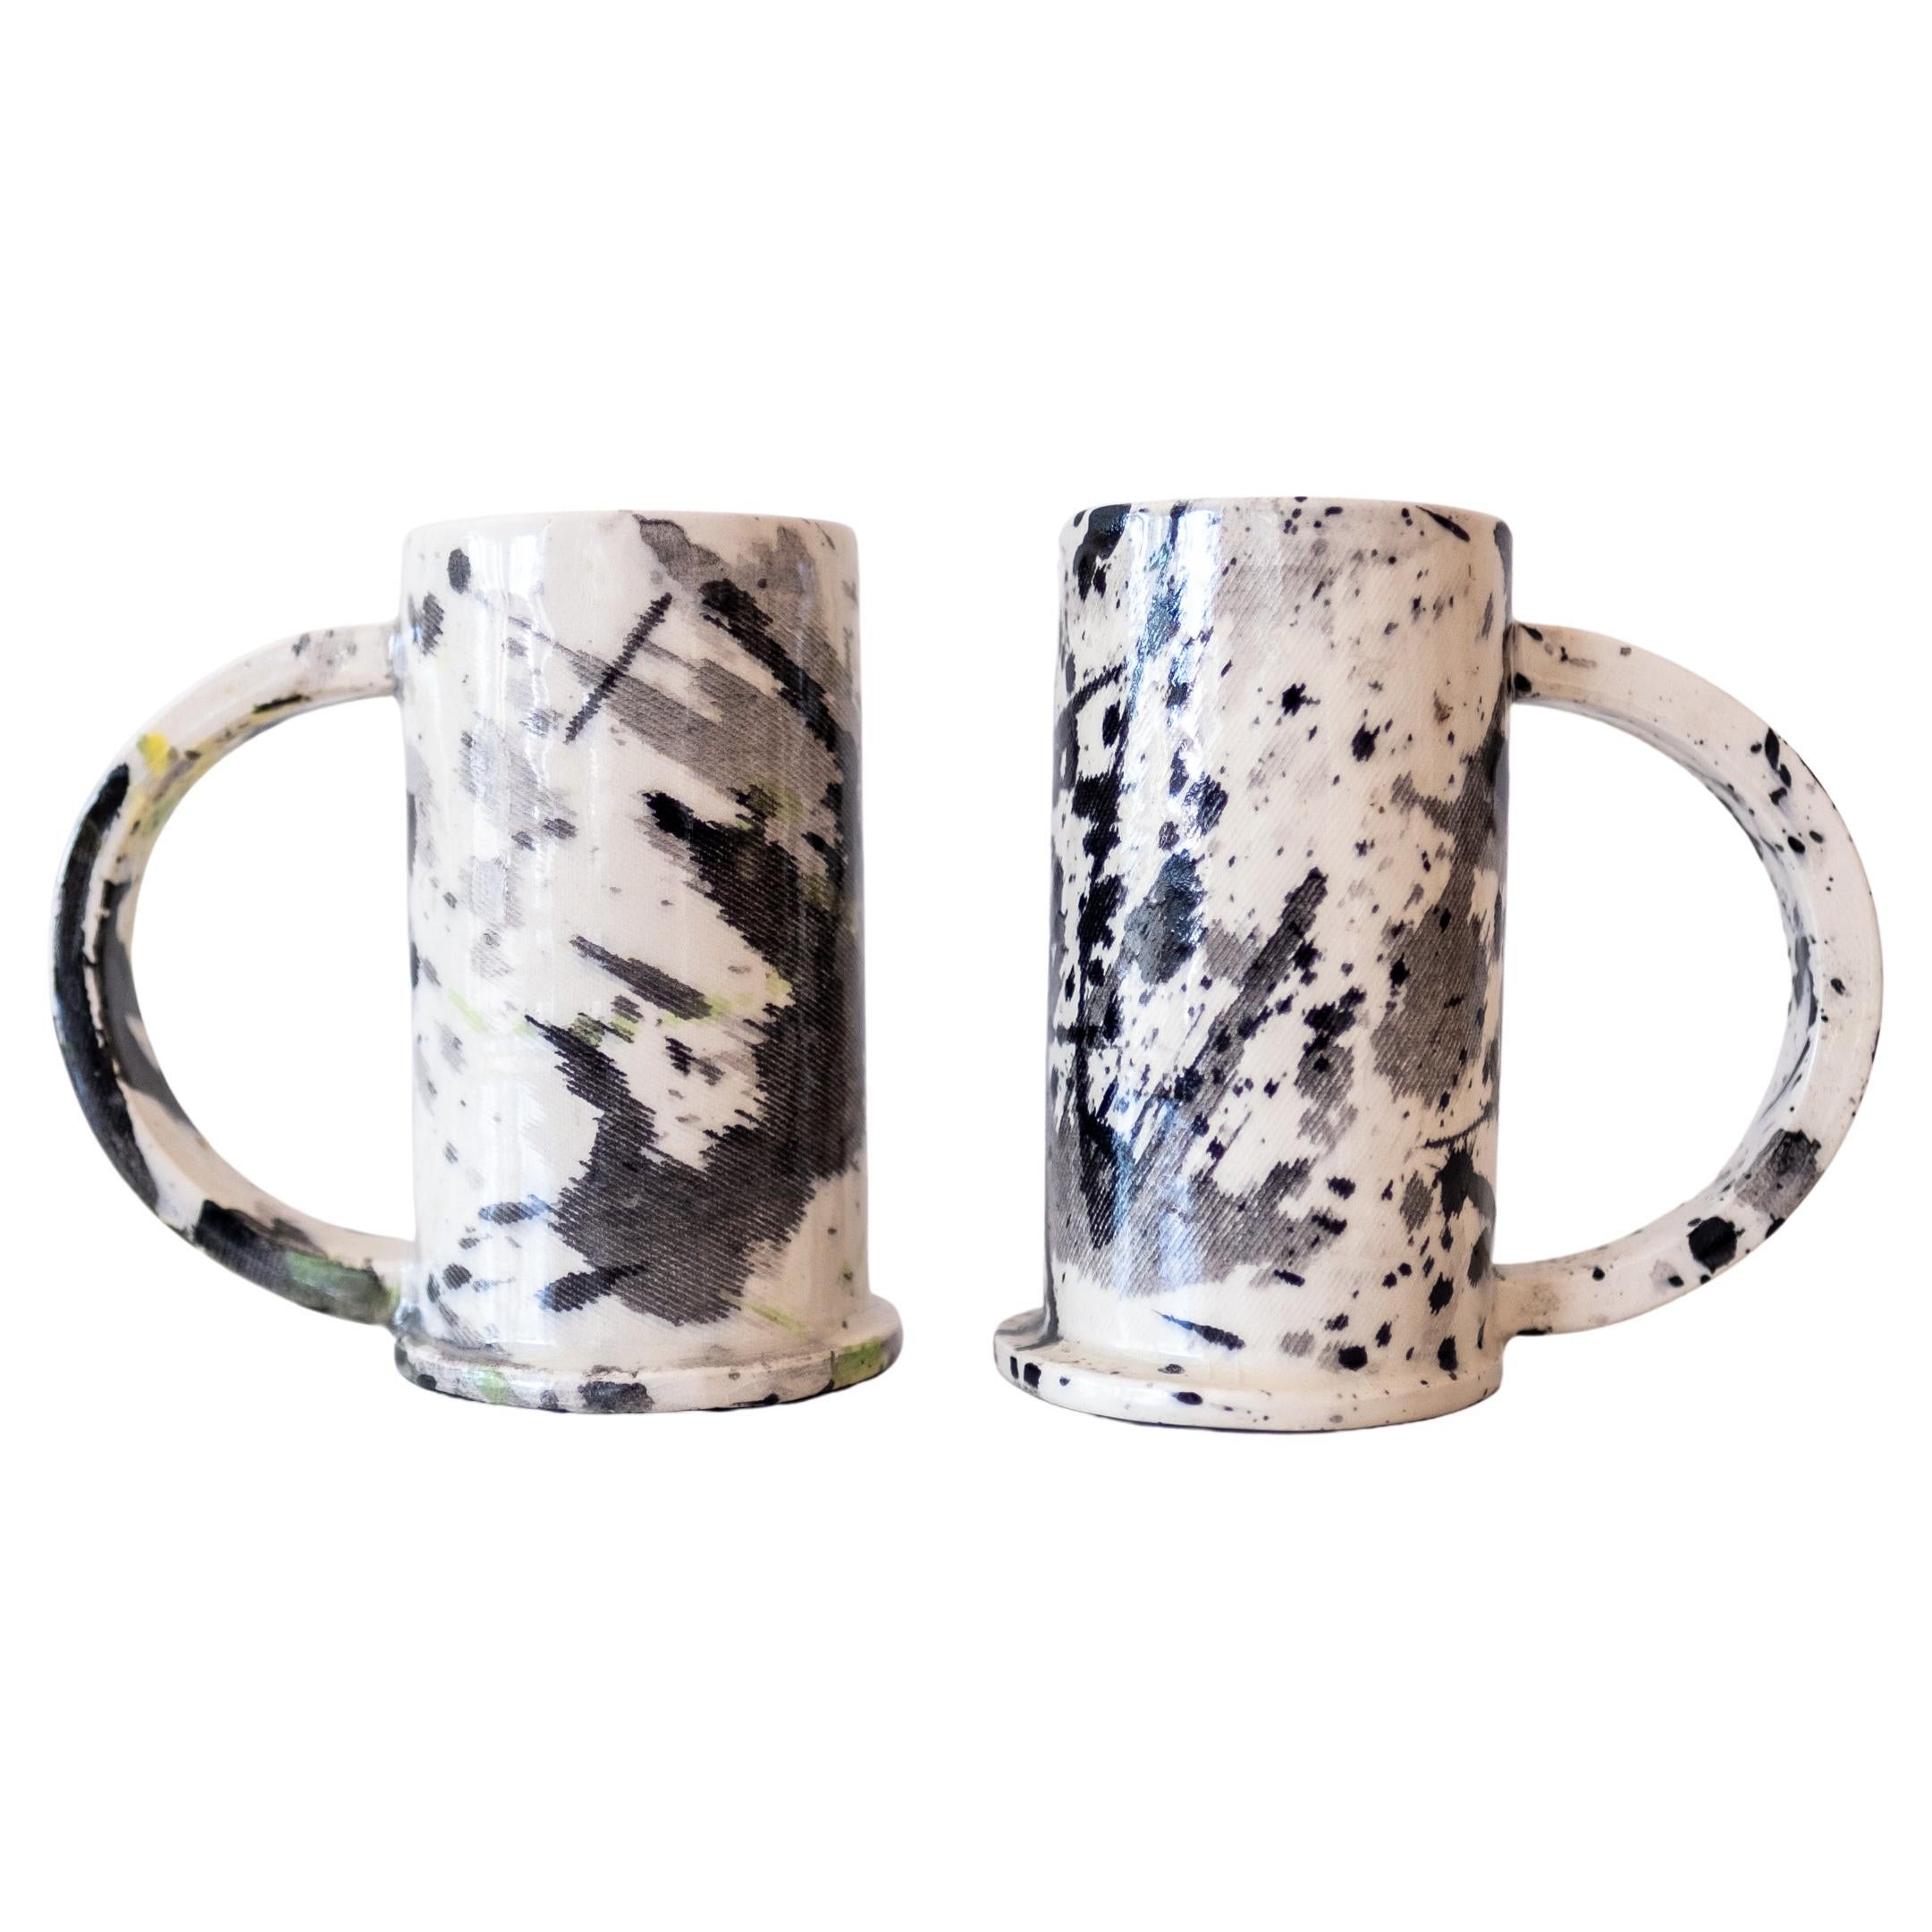 Peter Shire Ceramic Love Cups